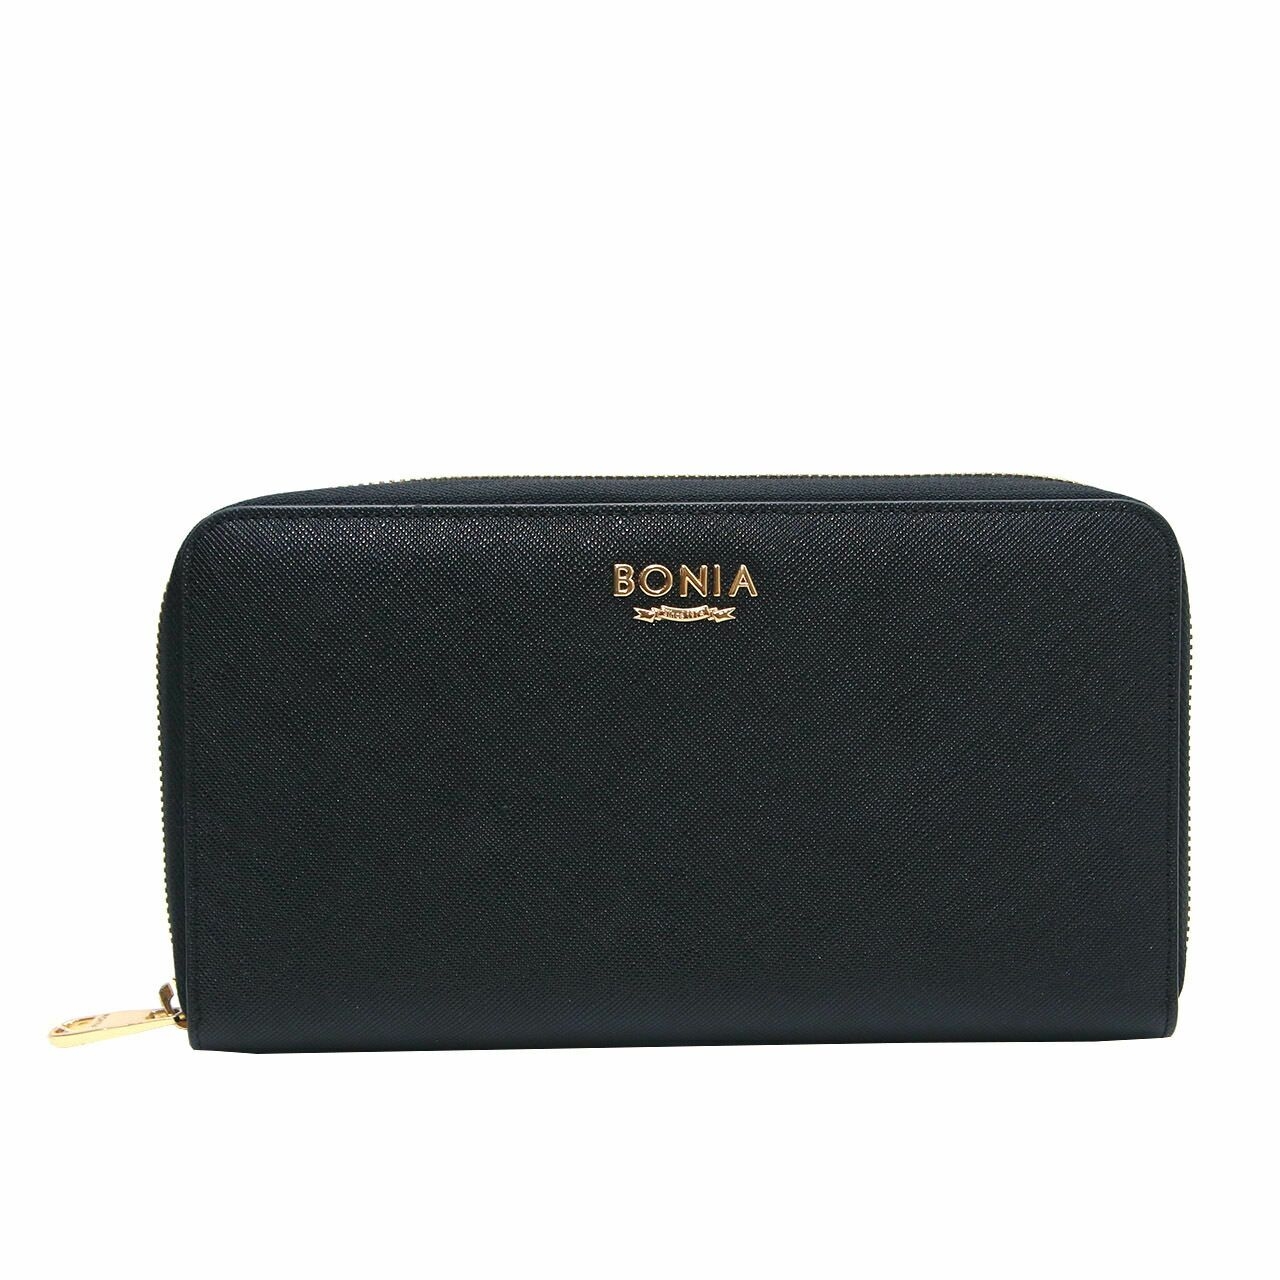 Bonia Saffiano Black Leather Long Wallet